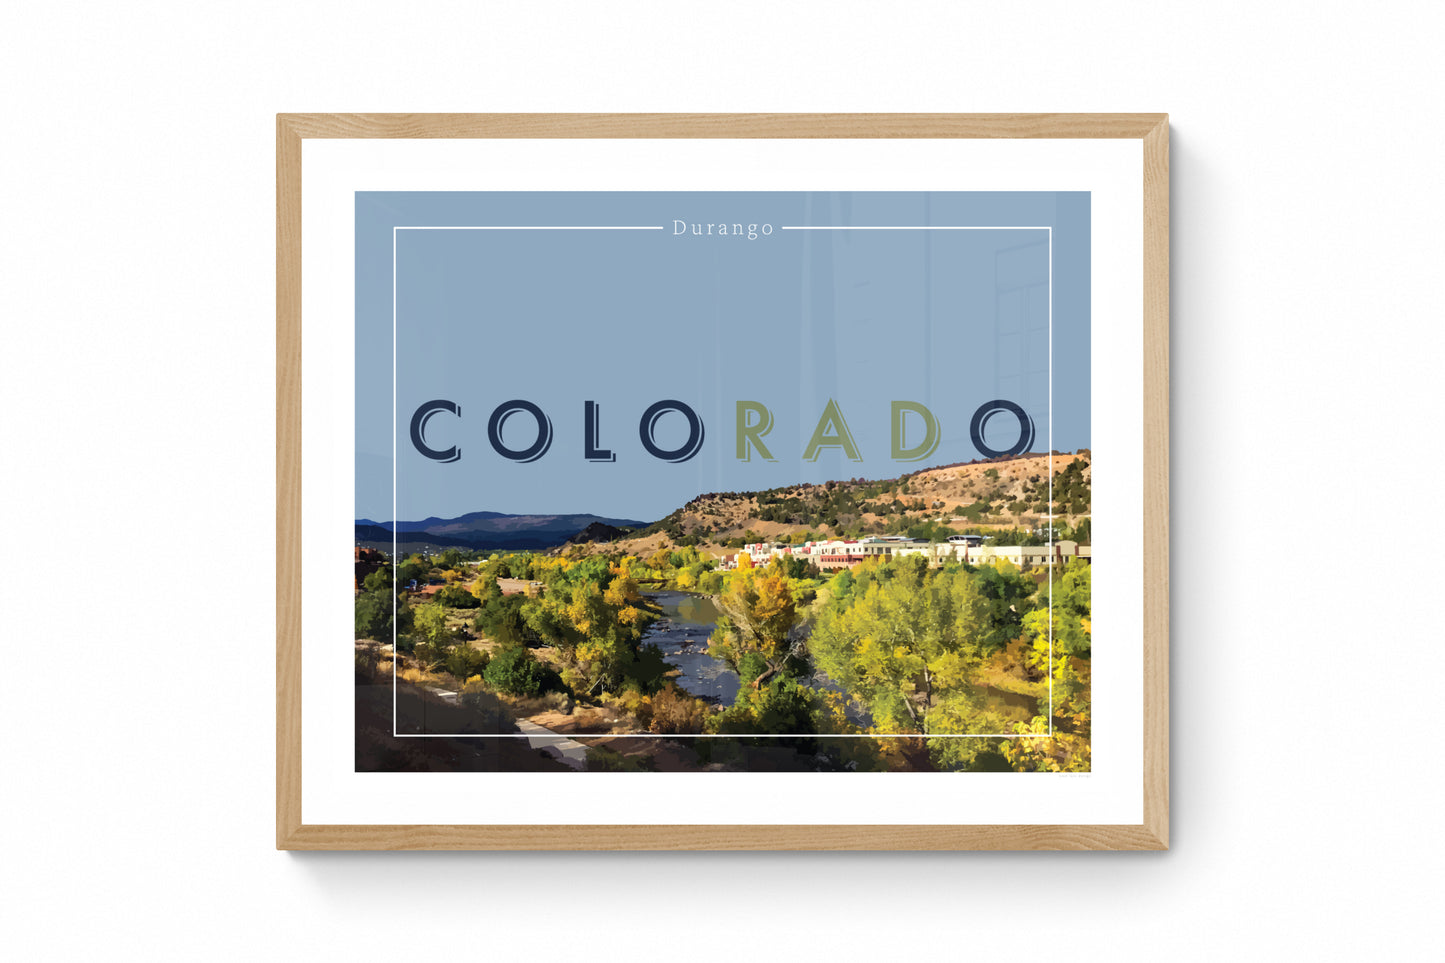 coloRADo - Durango, Wall Art, Print Only (No Frame)